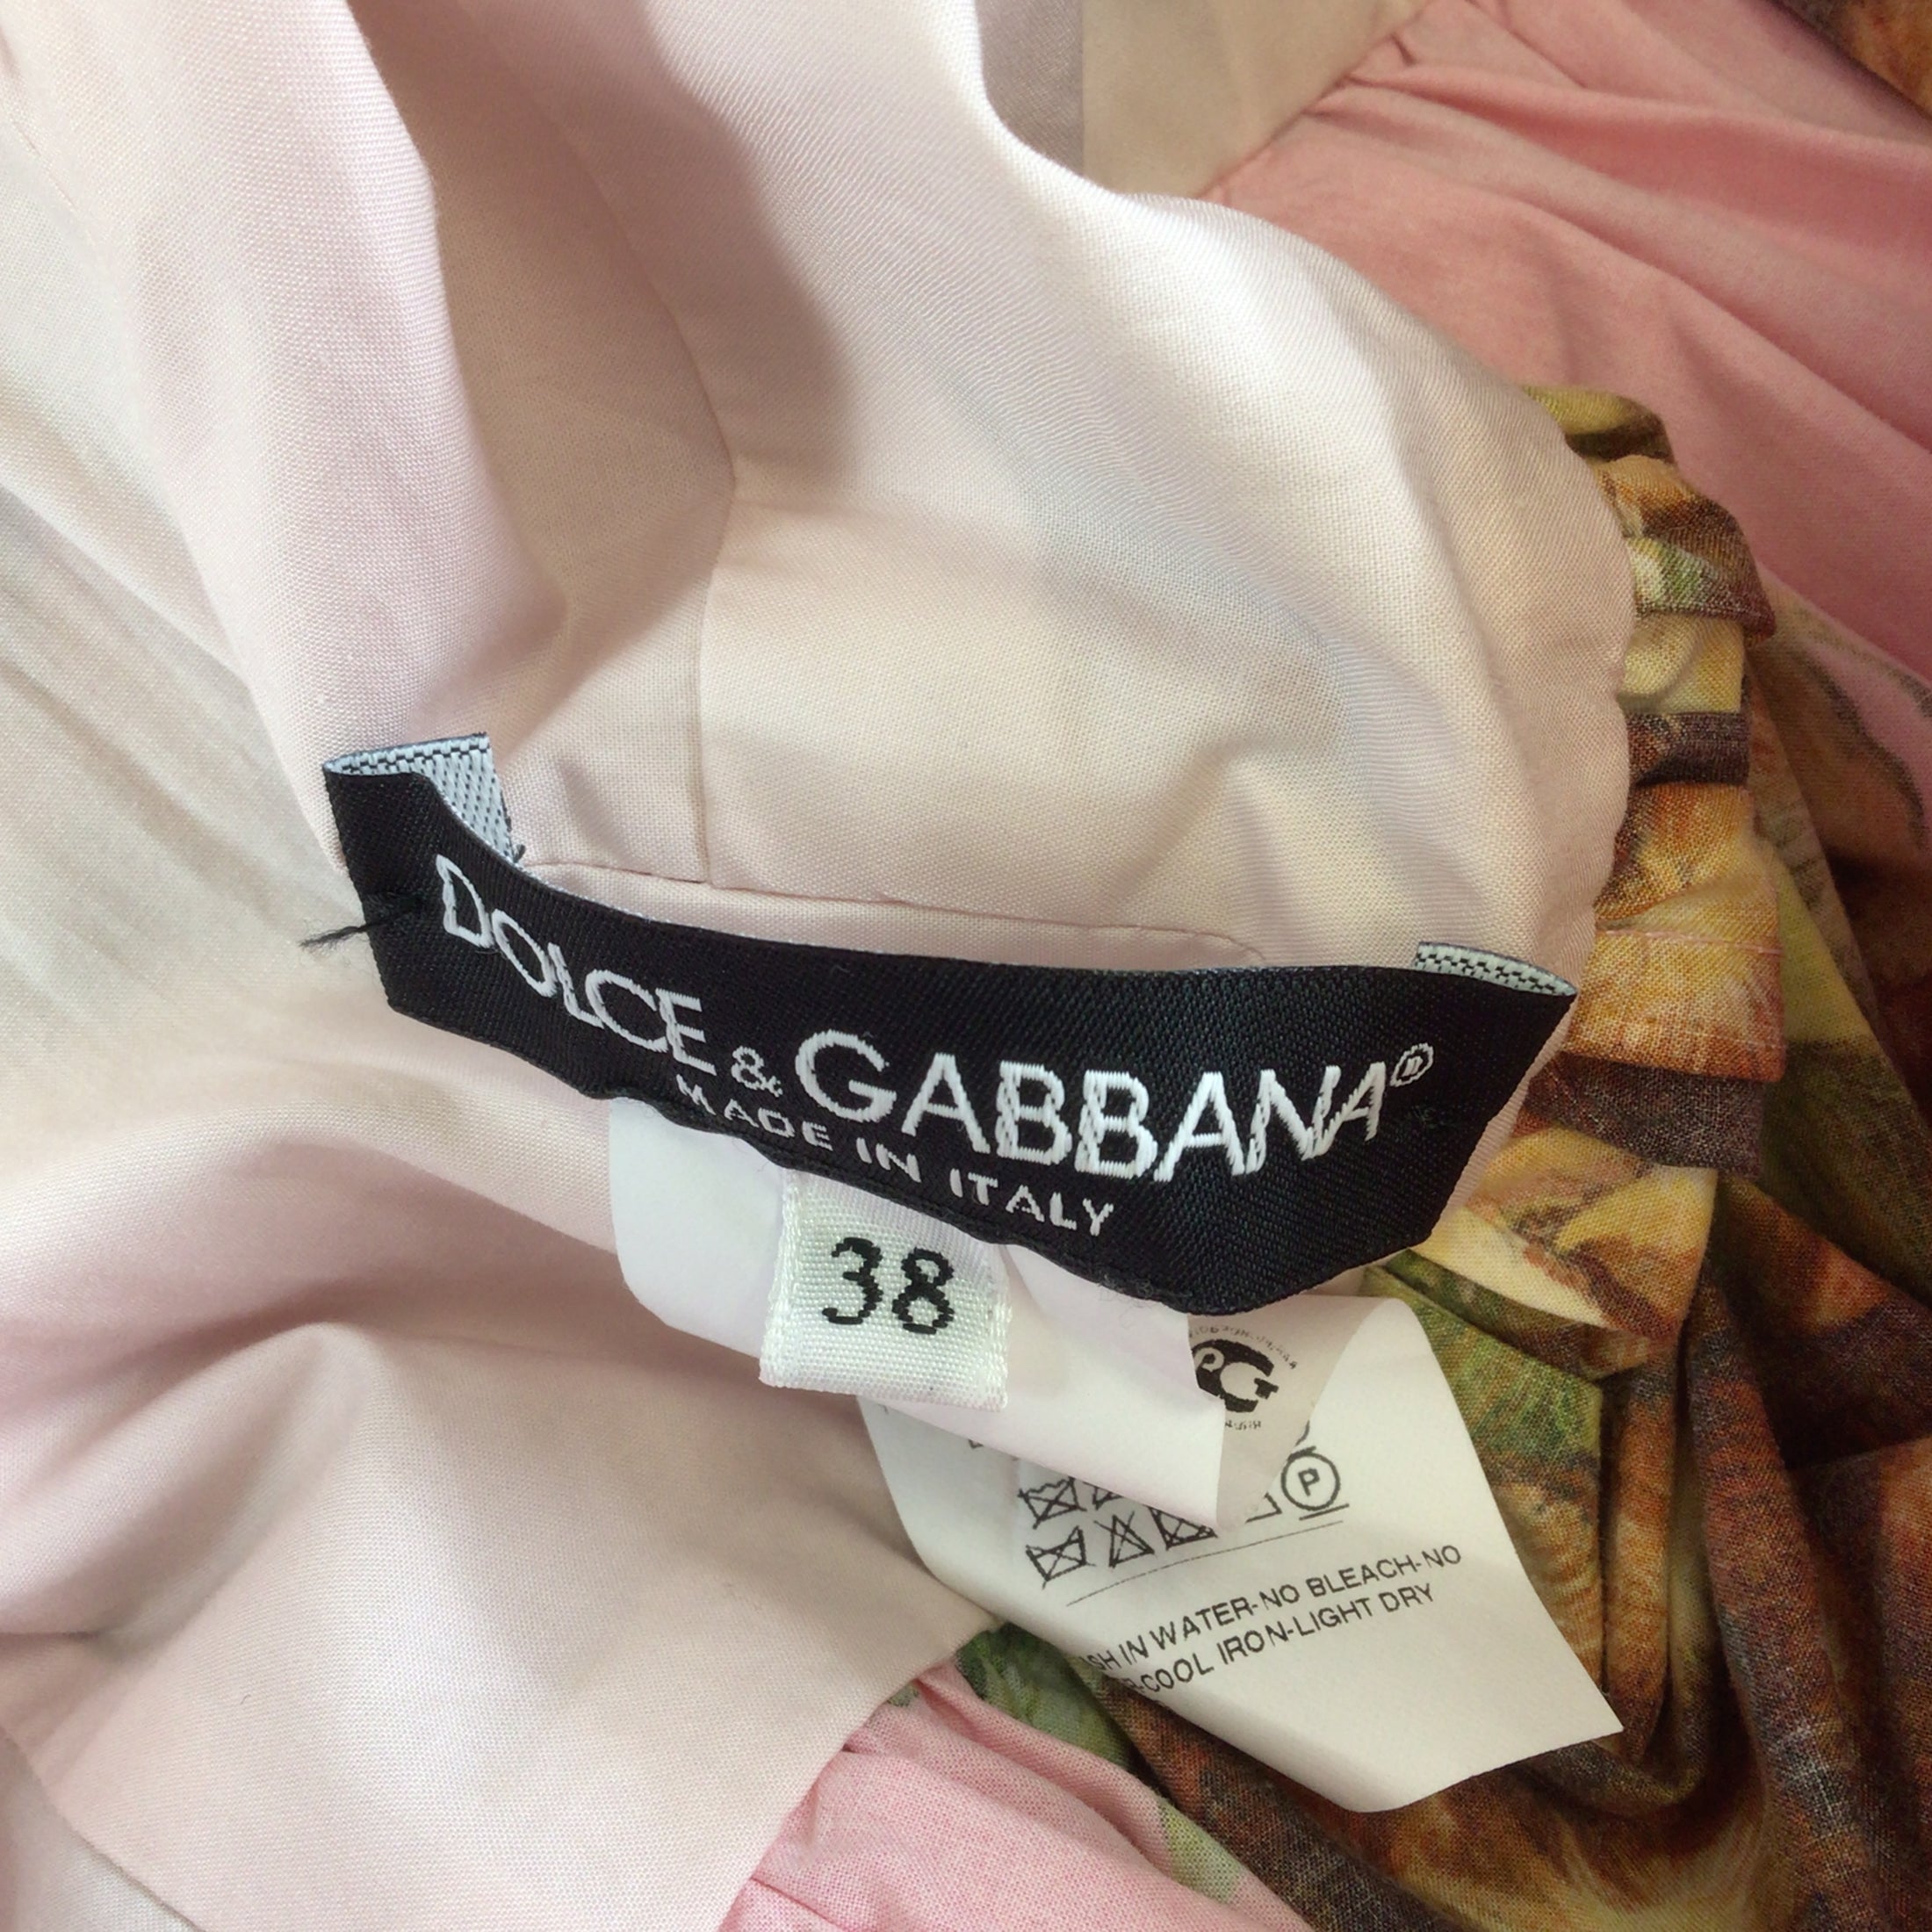 Dolce & Gabbana Pink Multi Pineapple Printed Sleeveless Cotton Dress